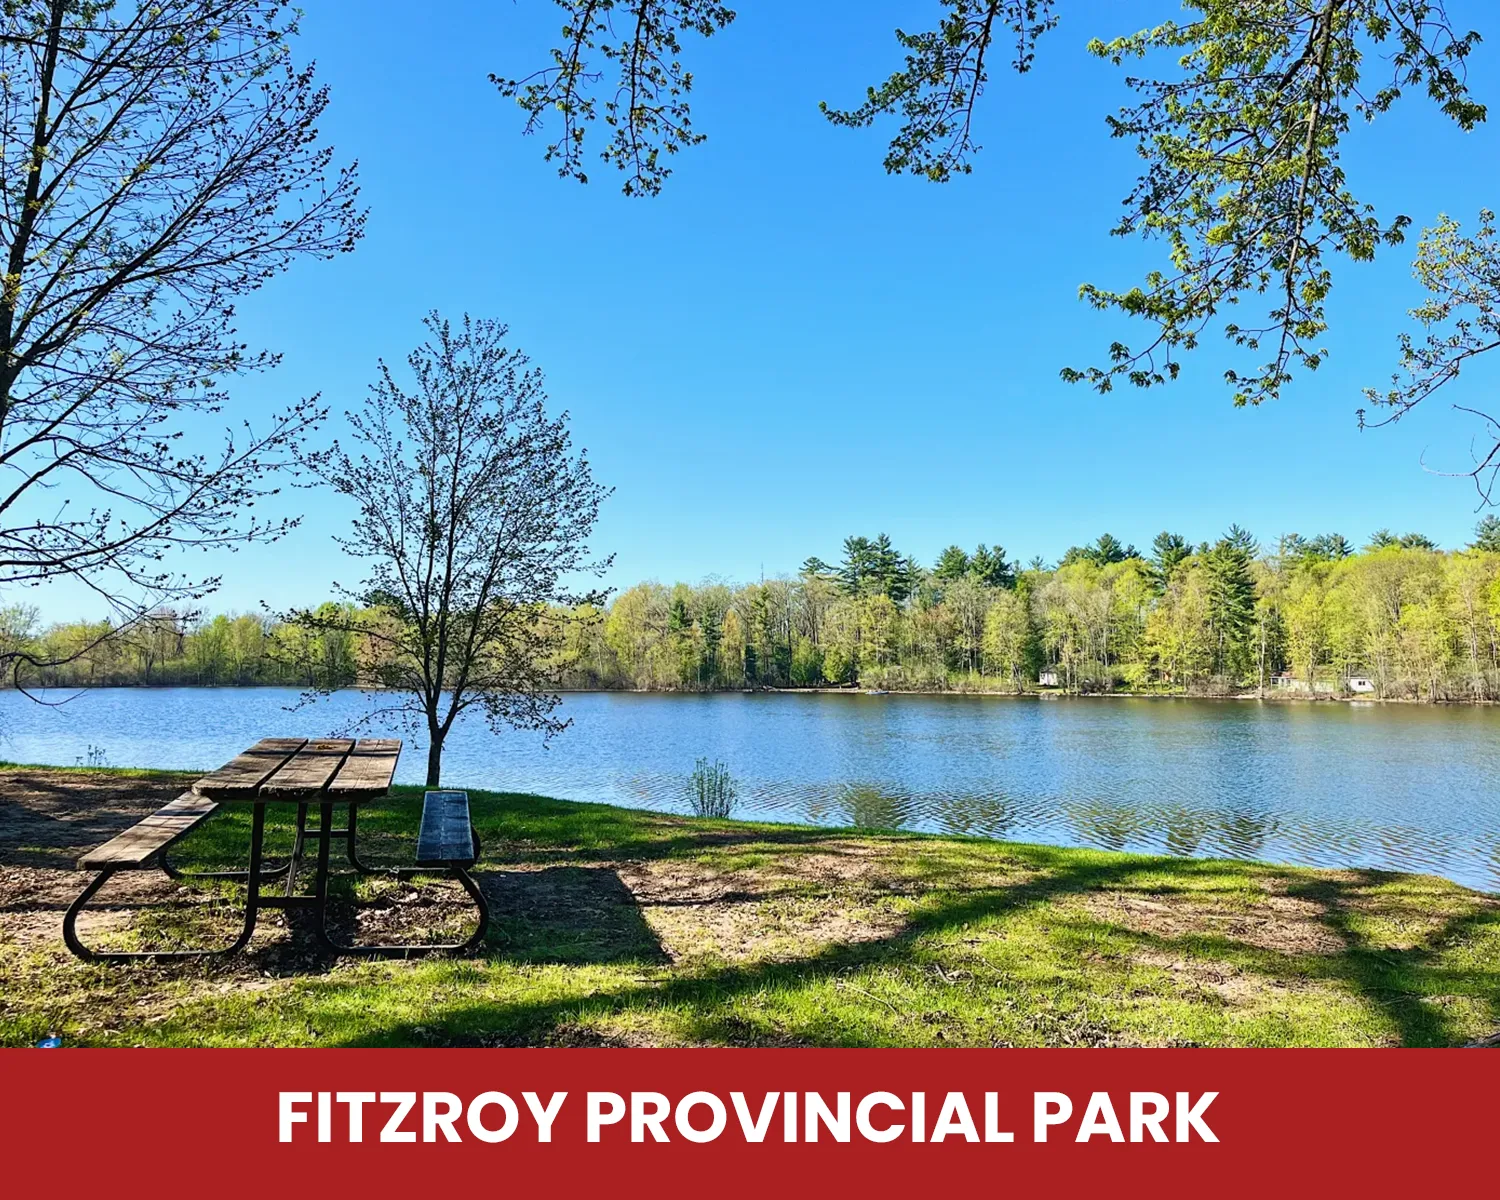 Fitzroy Provincial Park